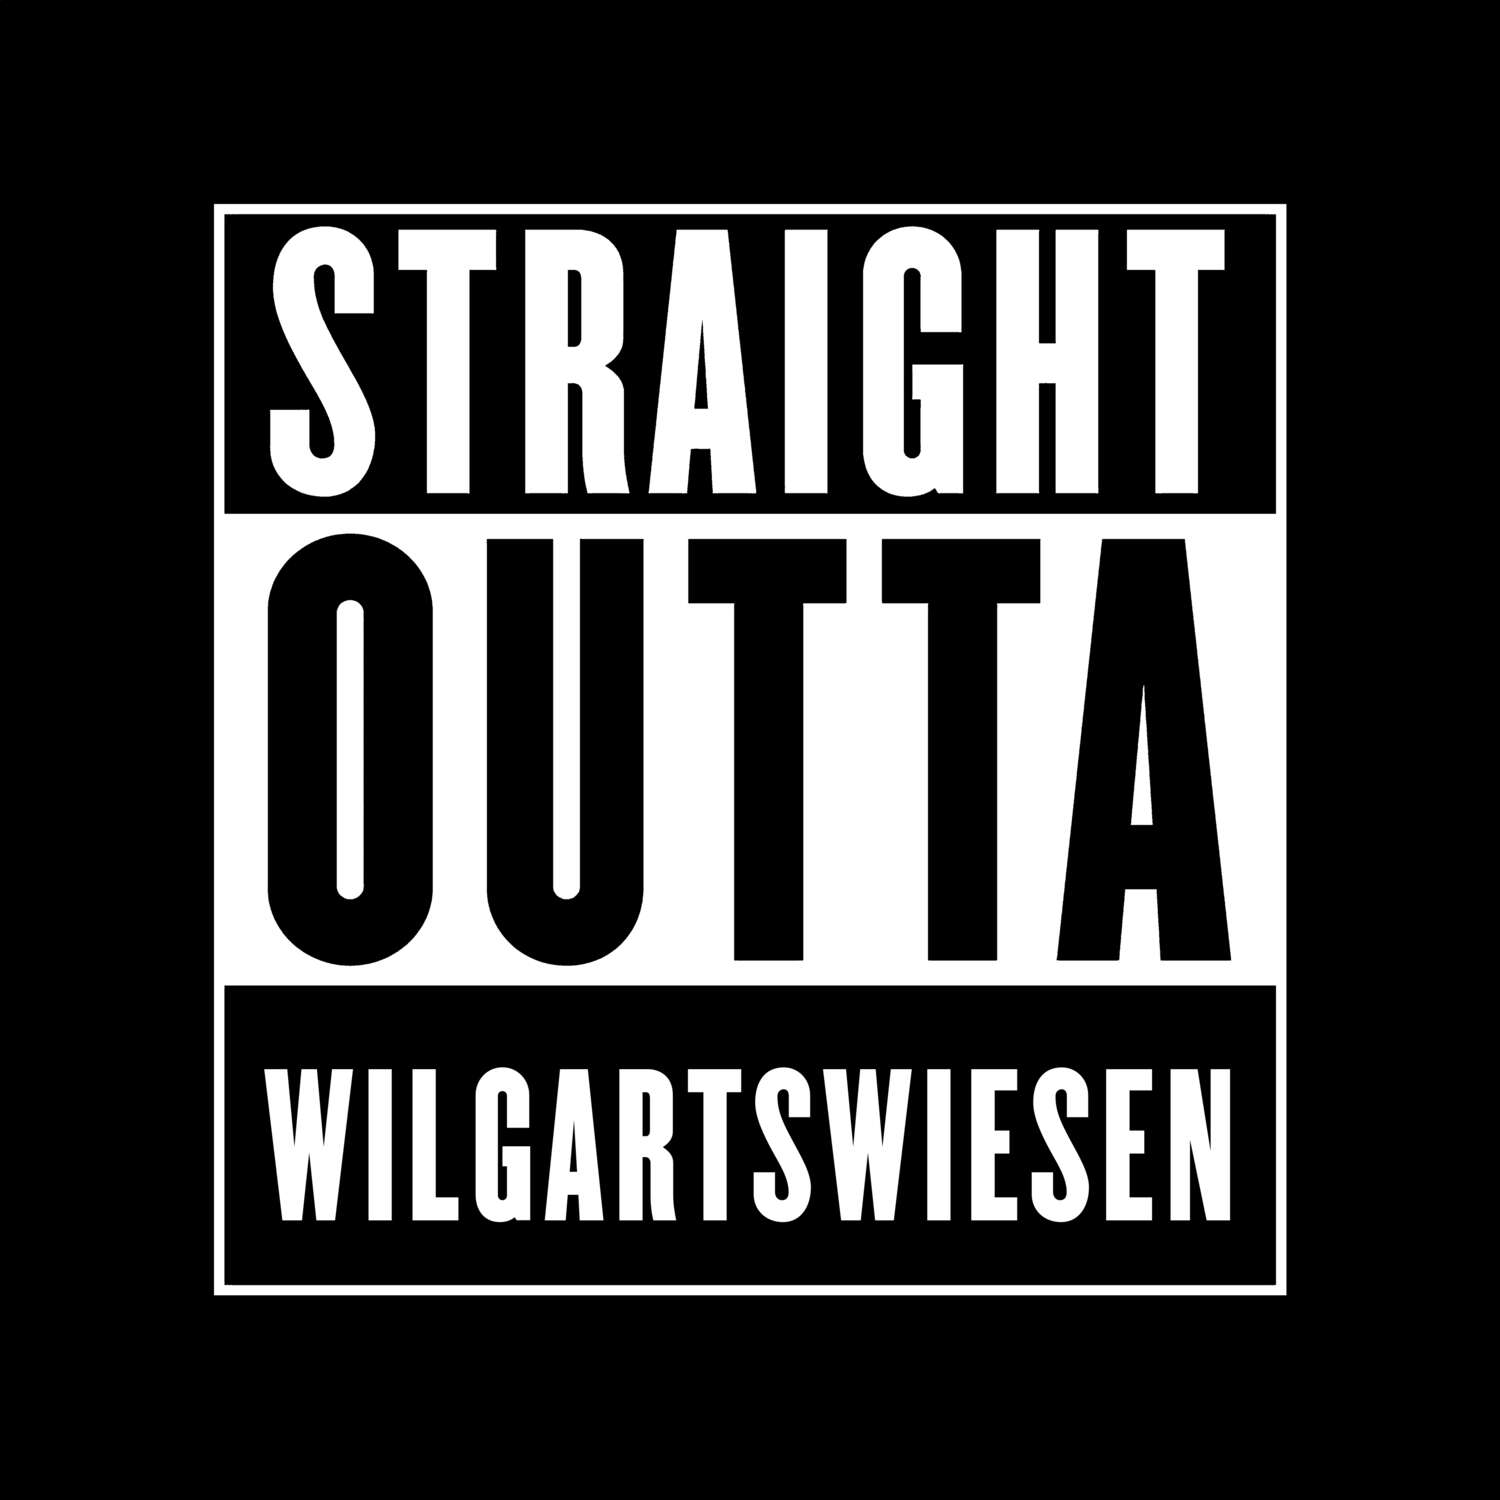 Wilgartswiesen T-Shirt »Straight Outta«